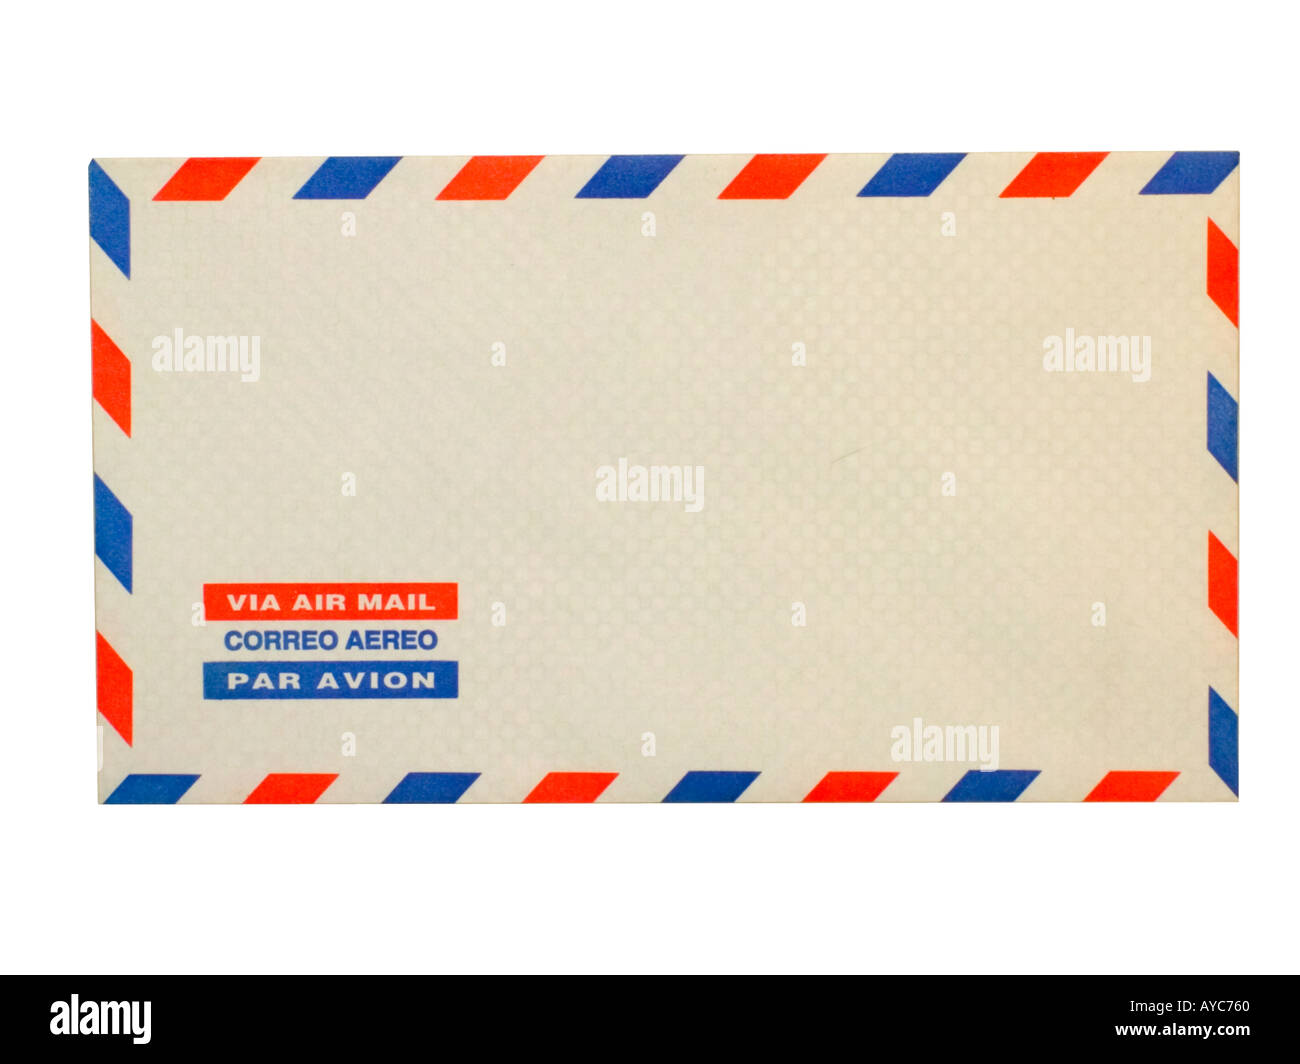 Airmail envelope Imágenes recortadas de stock - Alamy